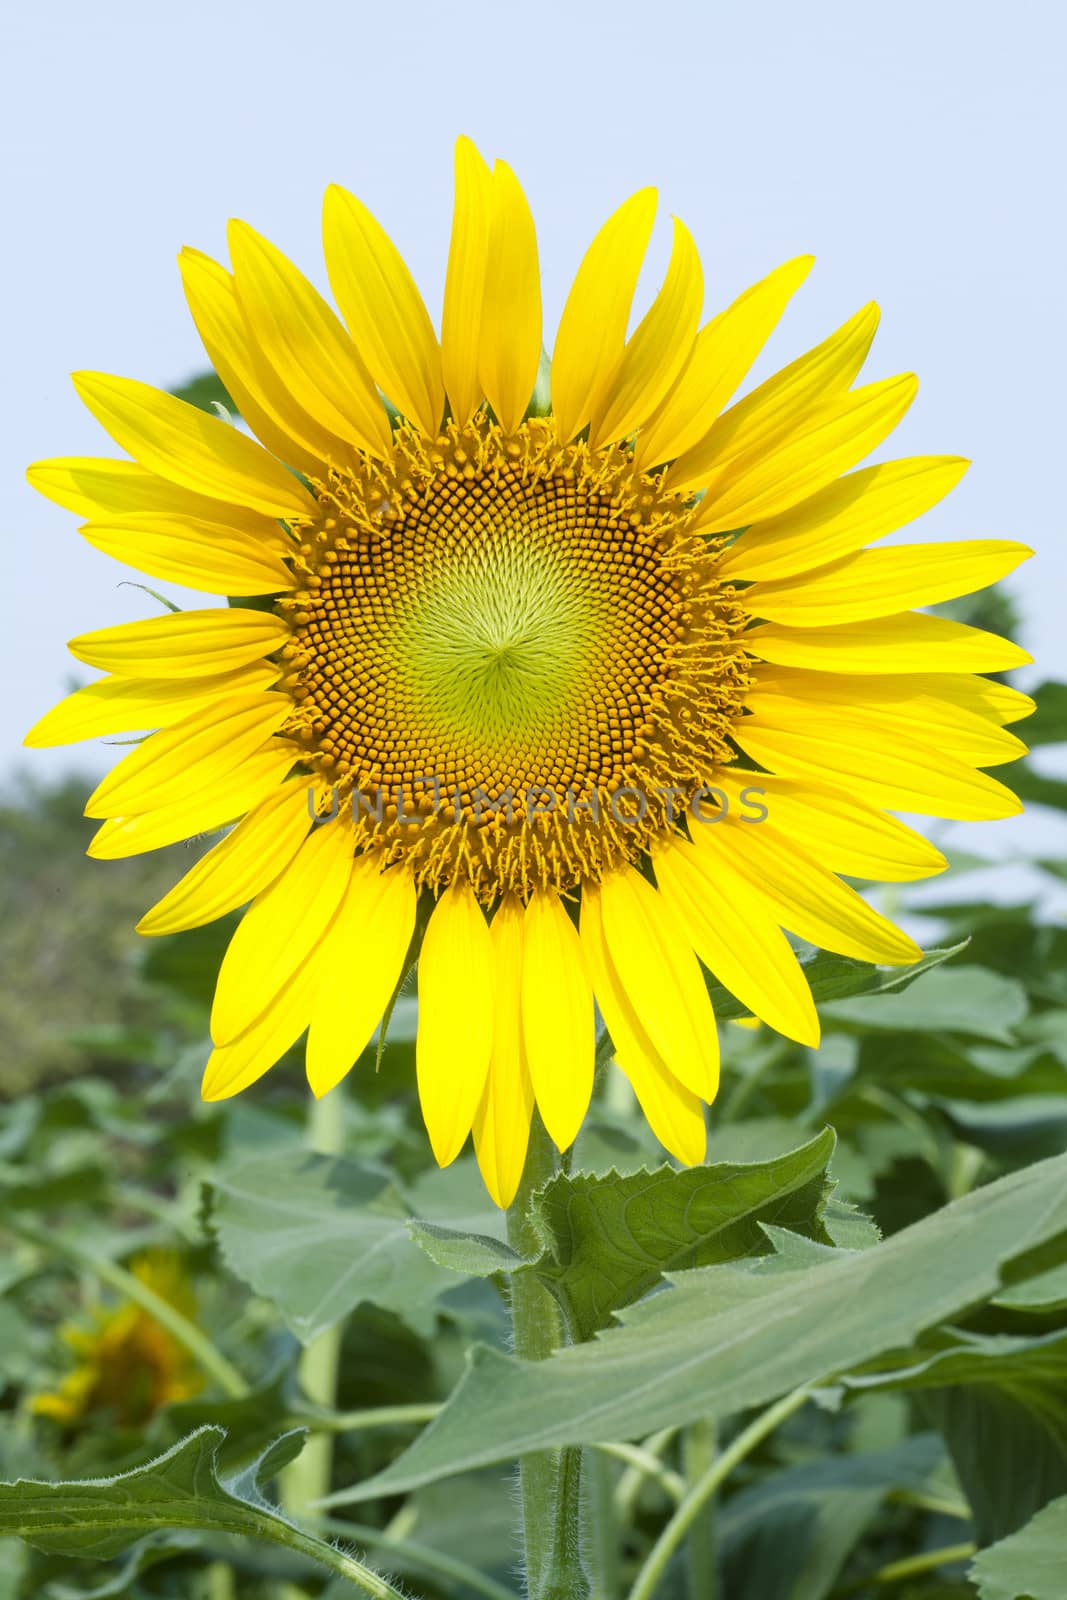 Sunflowers on plant